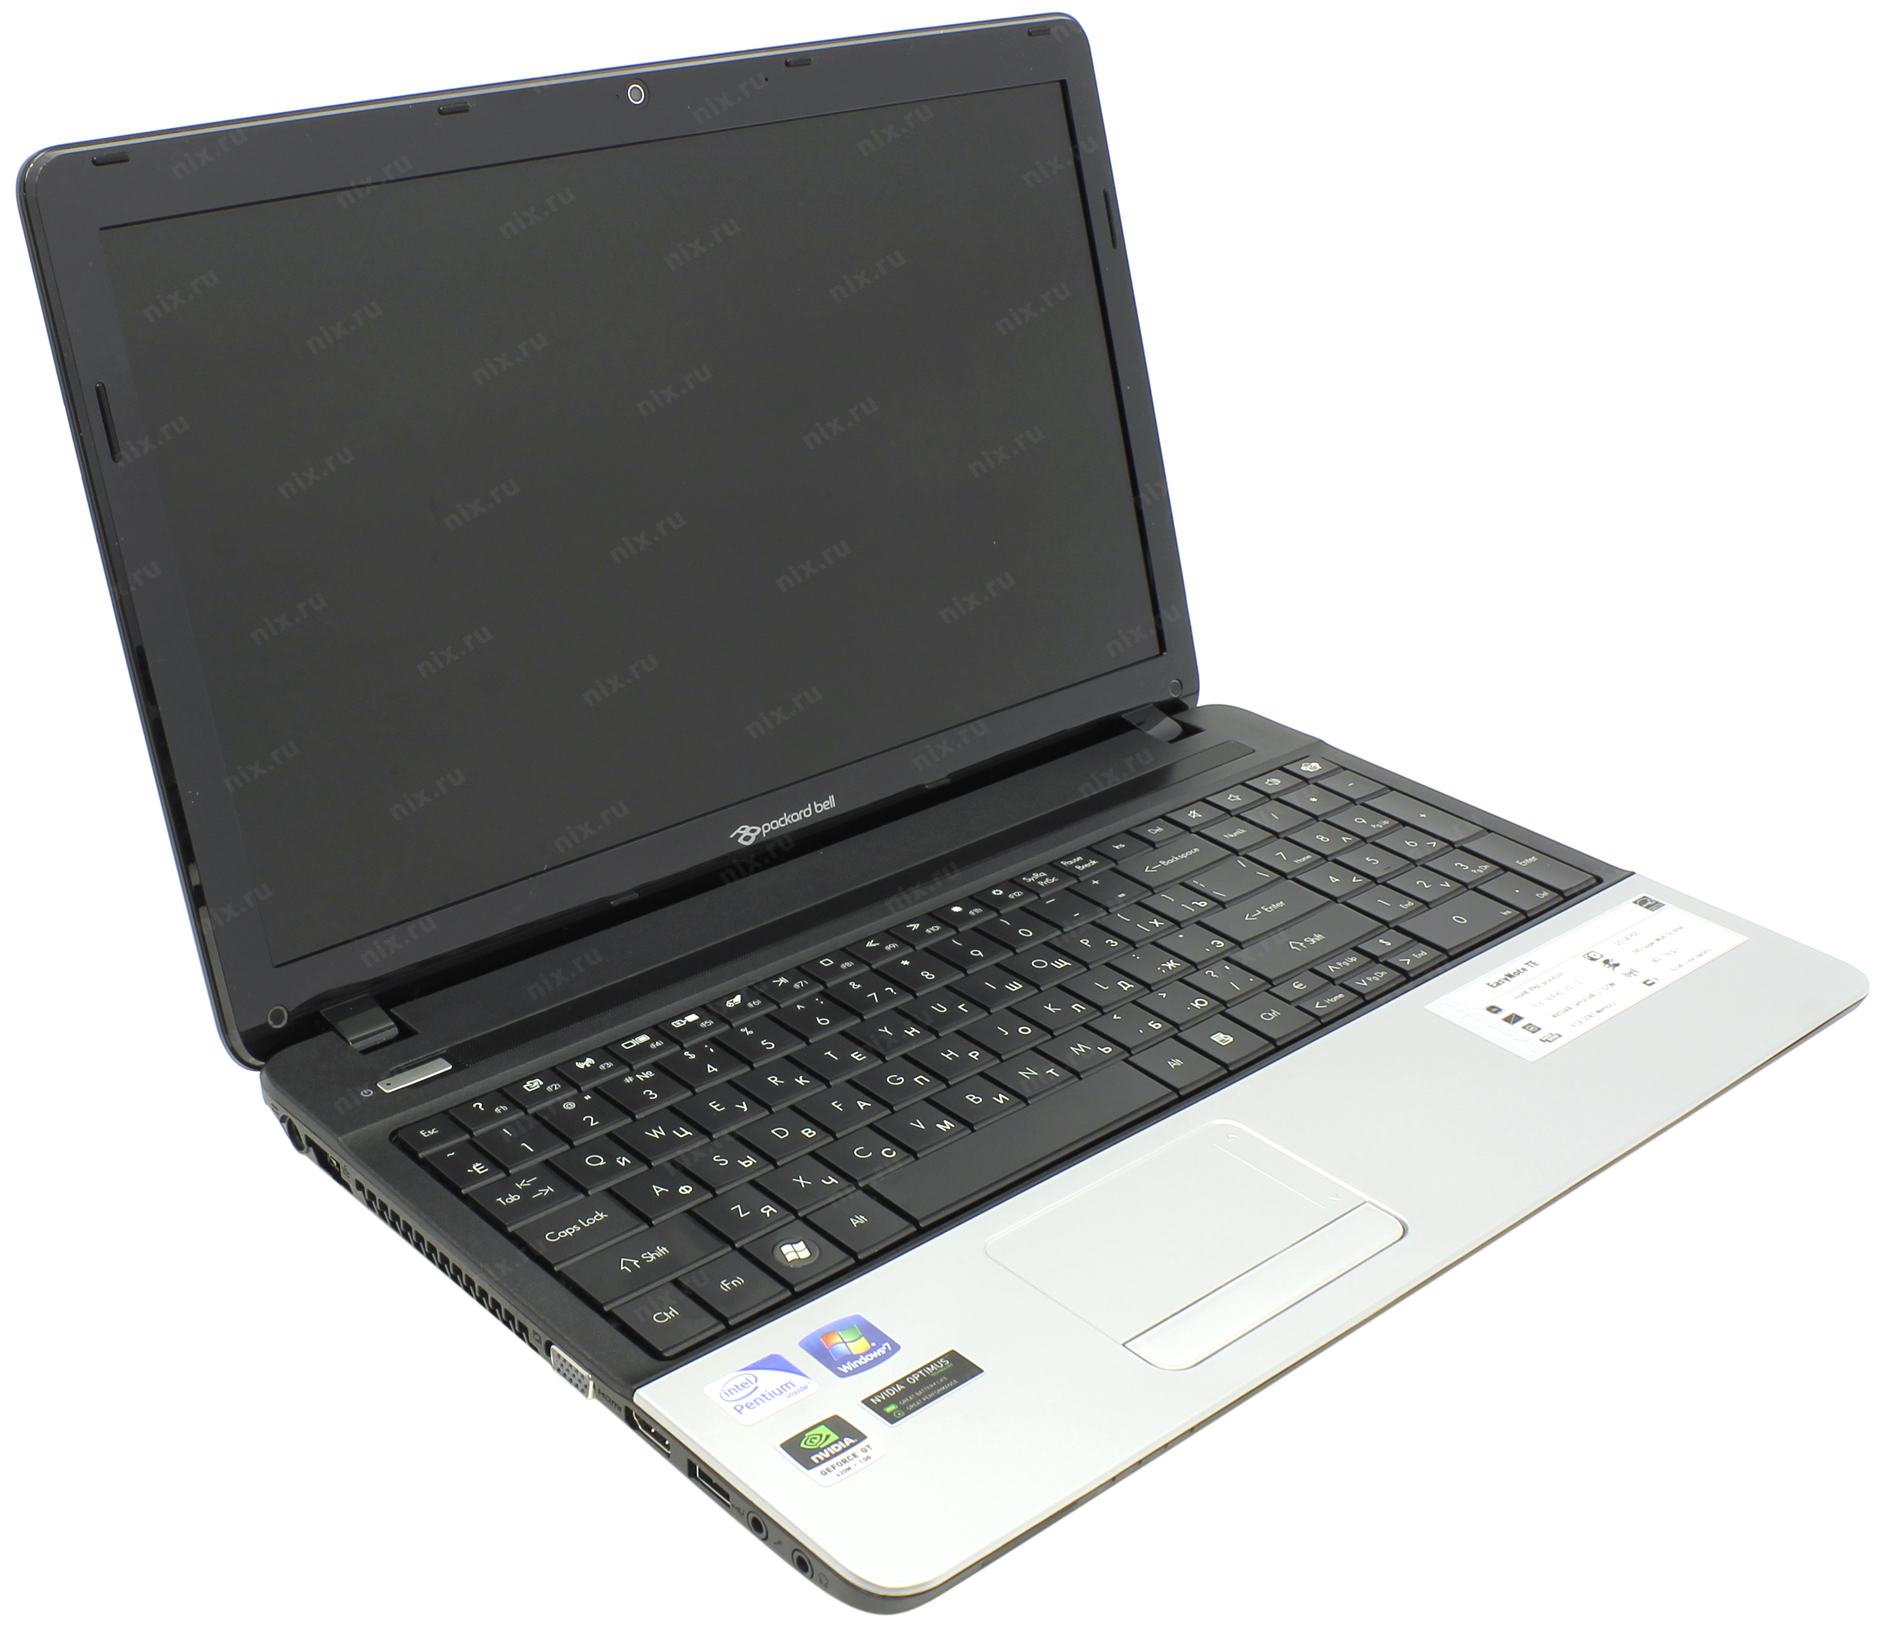 Ноутбук Packard Bell Easynote Te70bh-38ww